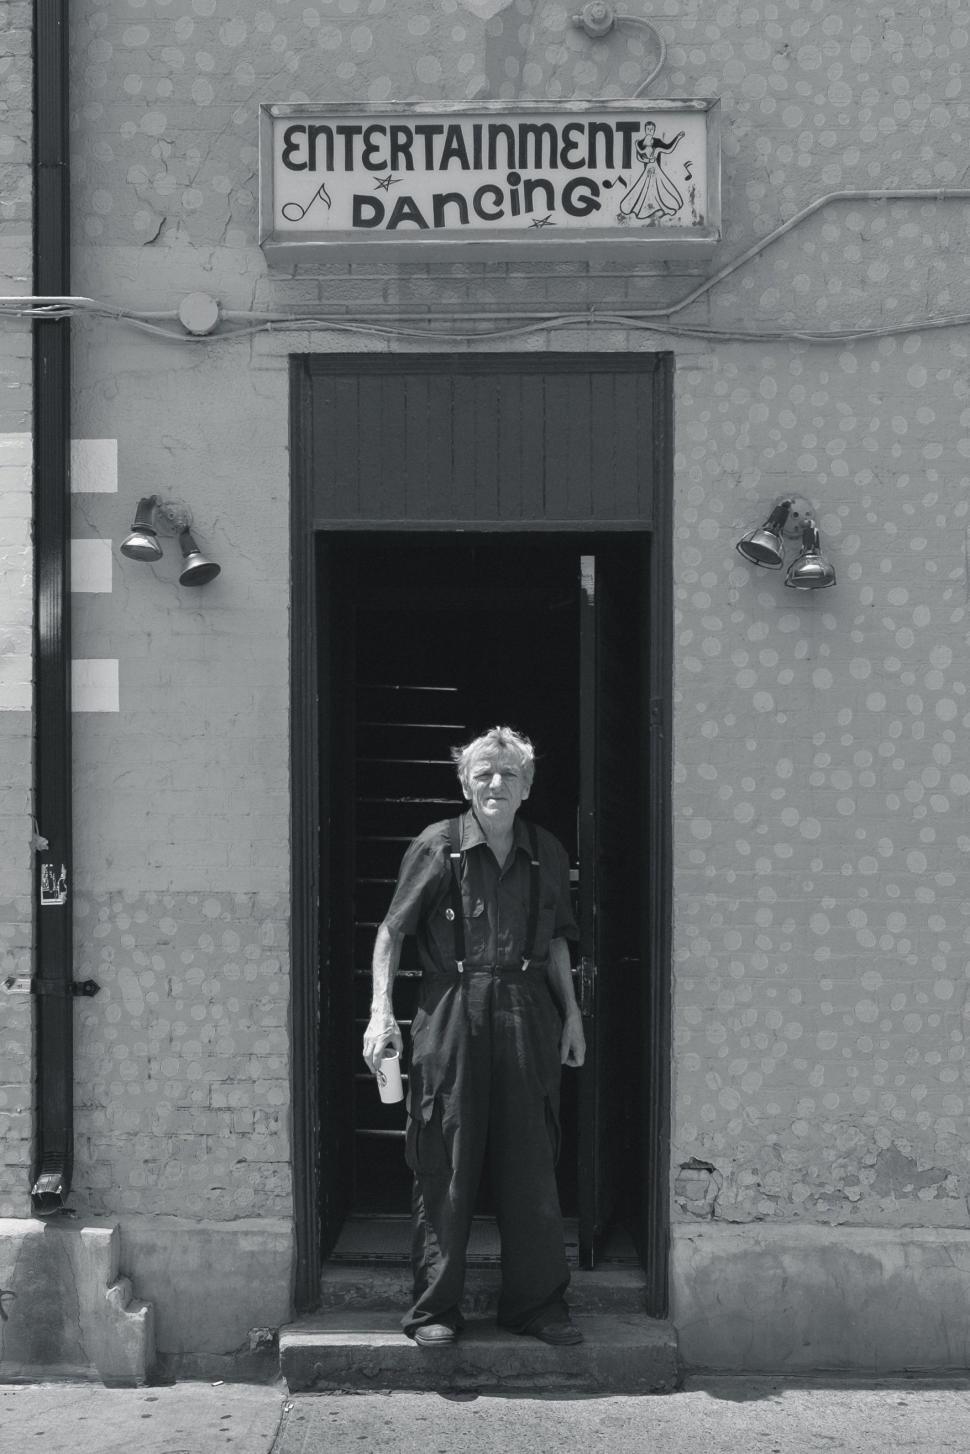 Free Image of Man Standing in Doorway of a Building 